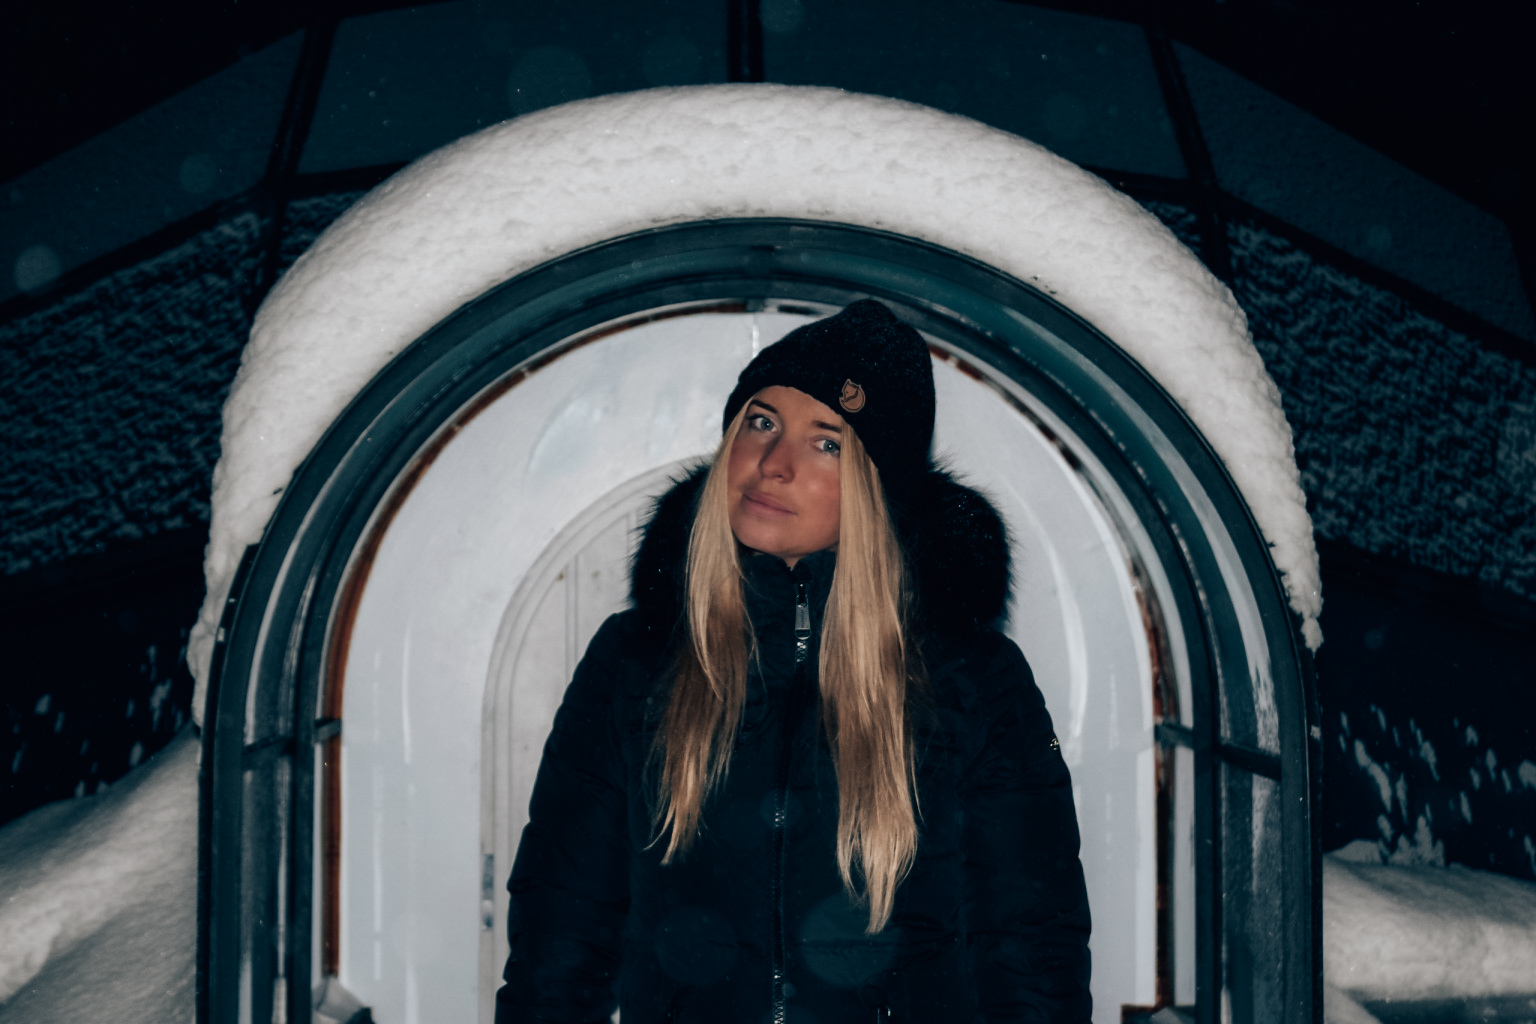 Kakslauttanen arctic resort glass igloo east village